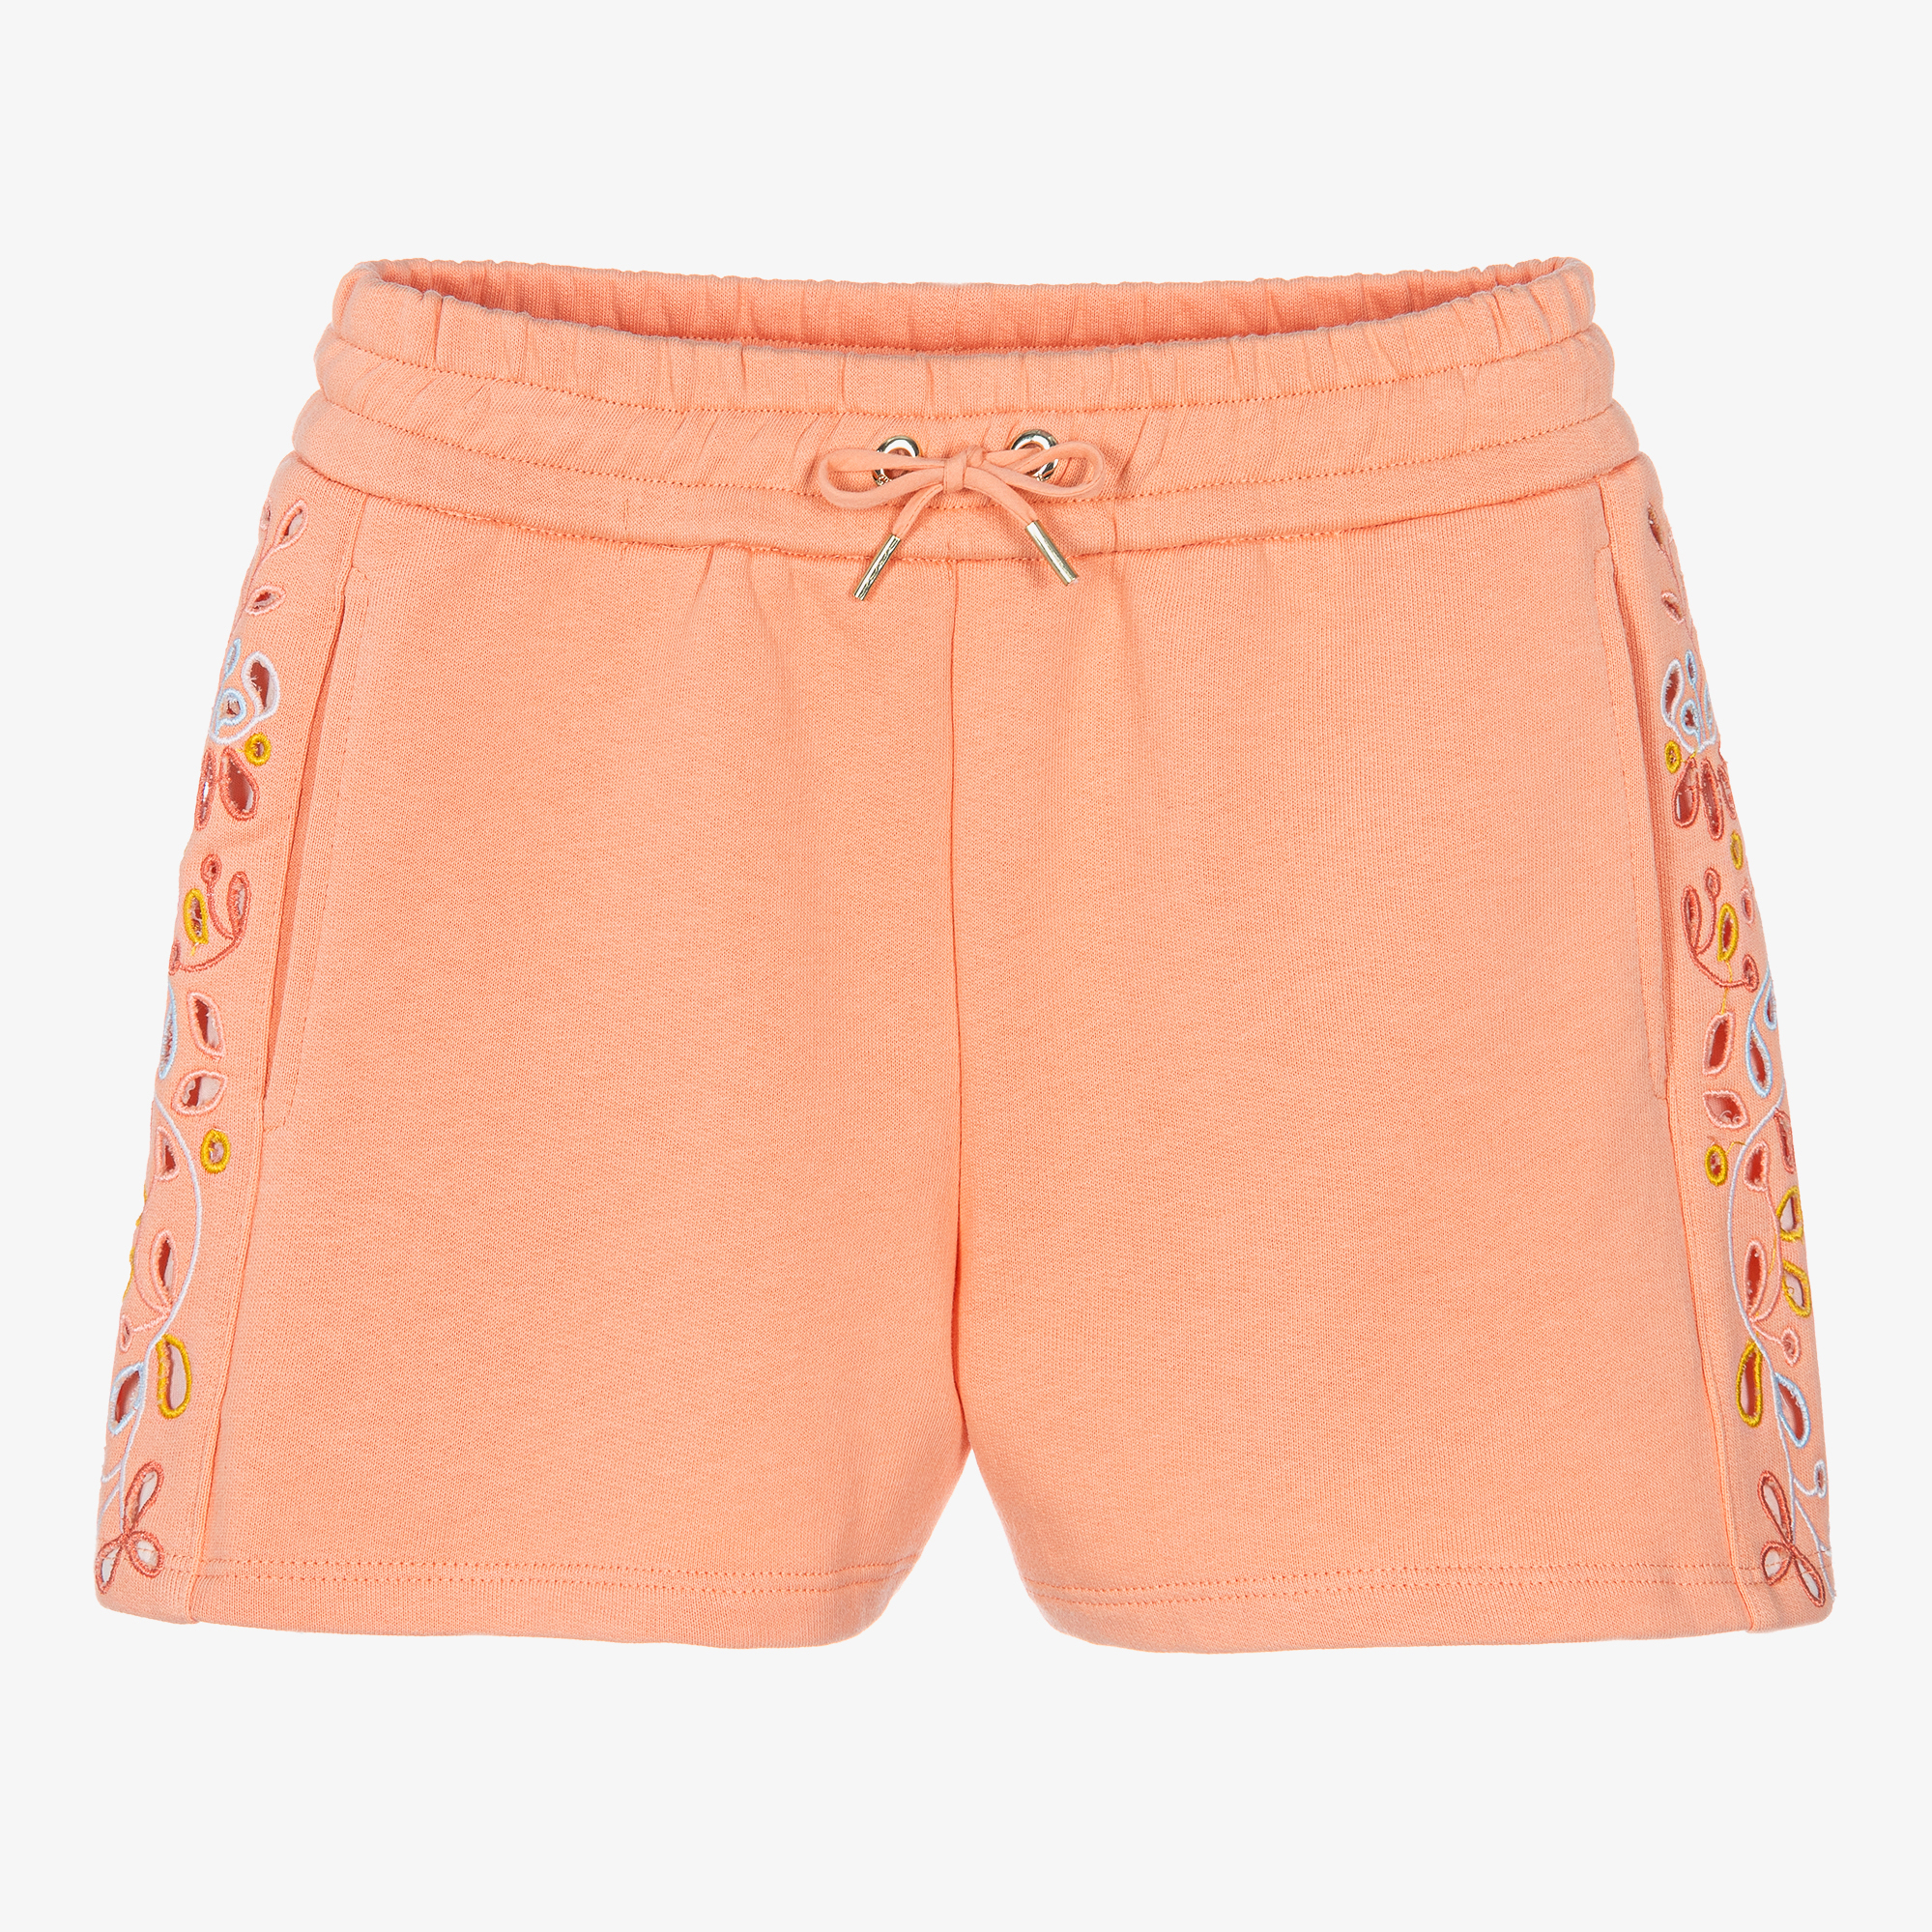 Coral orange short shorts